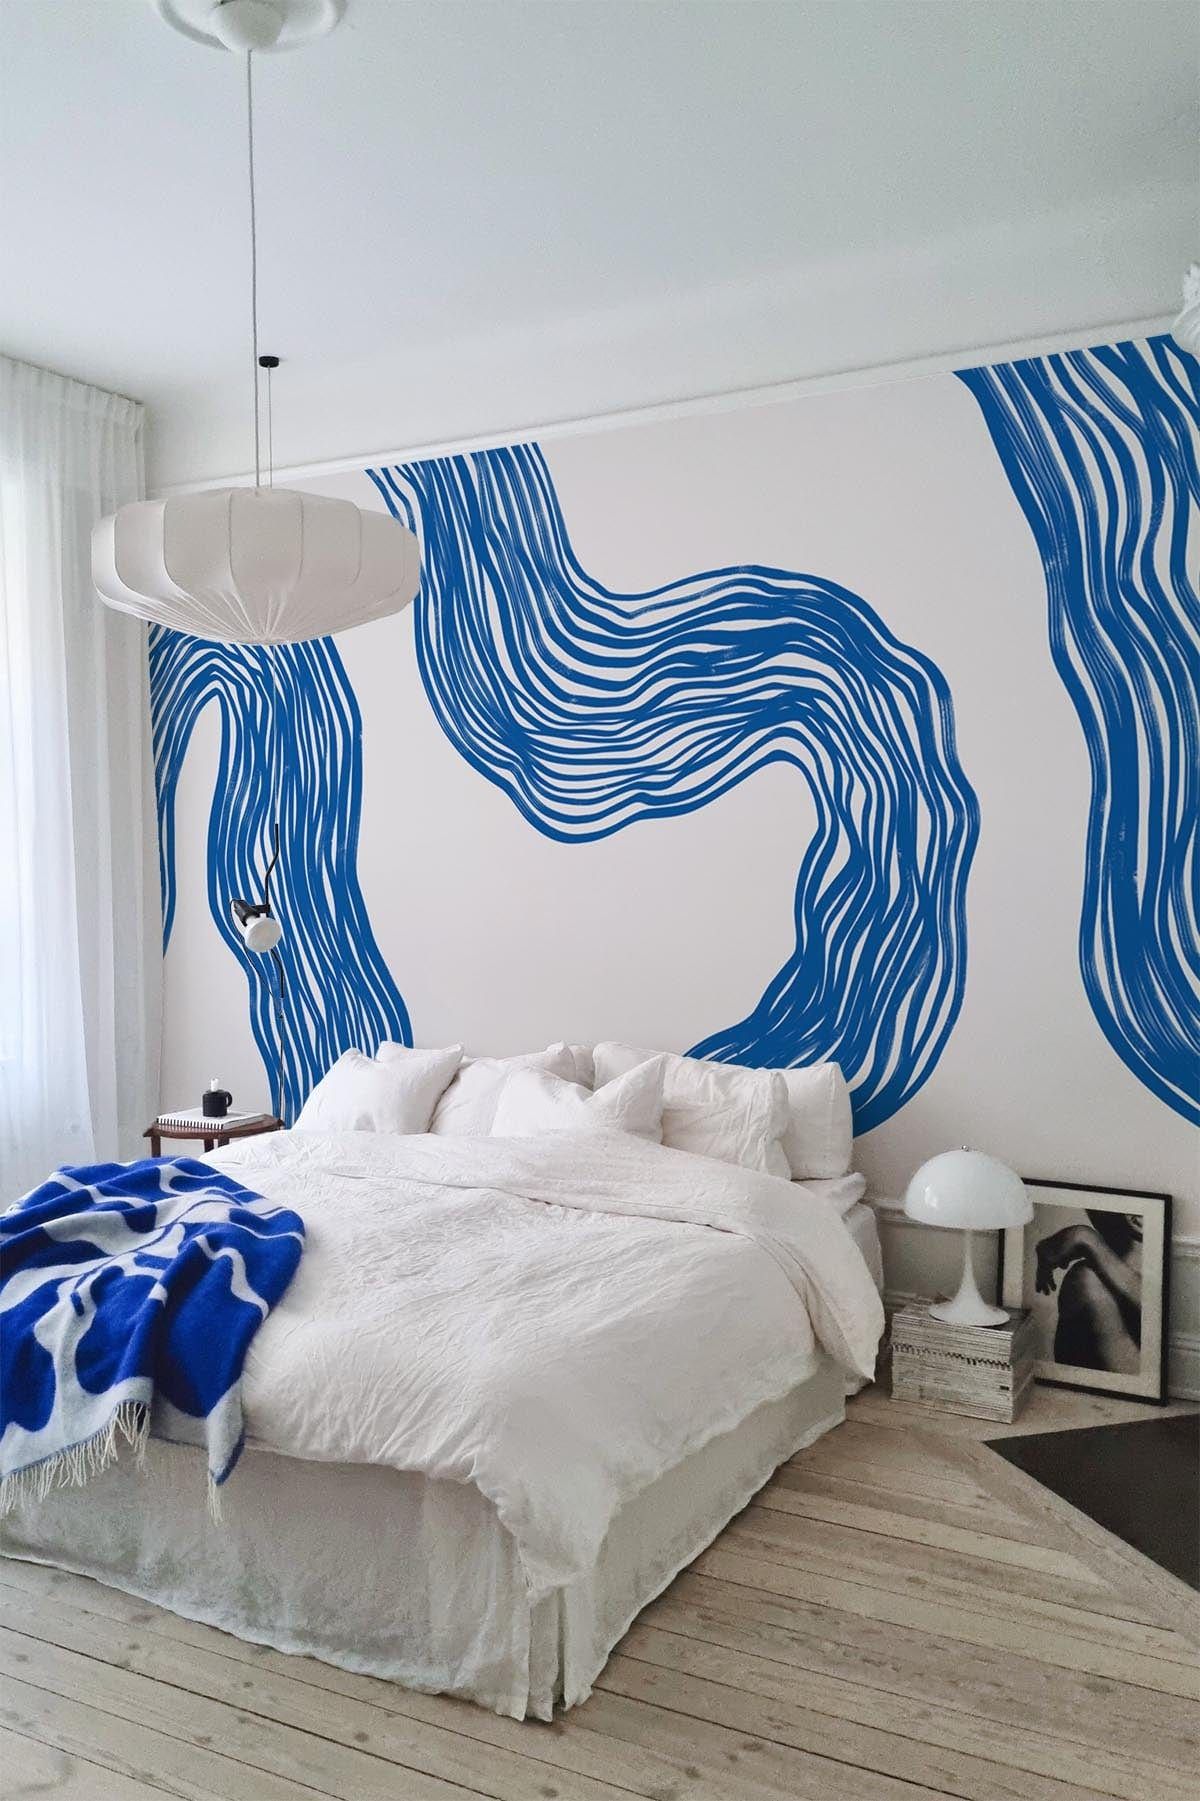 Bedroom Wall Designs